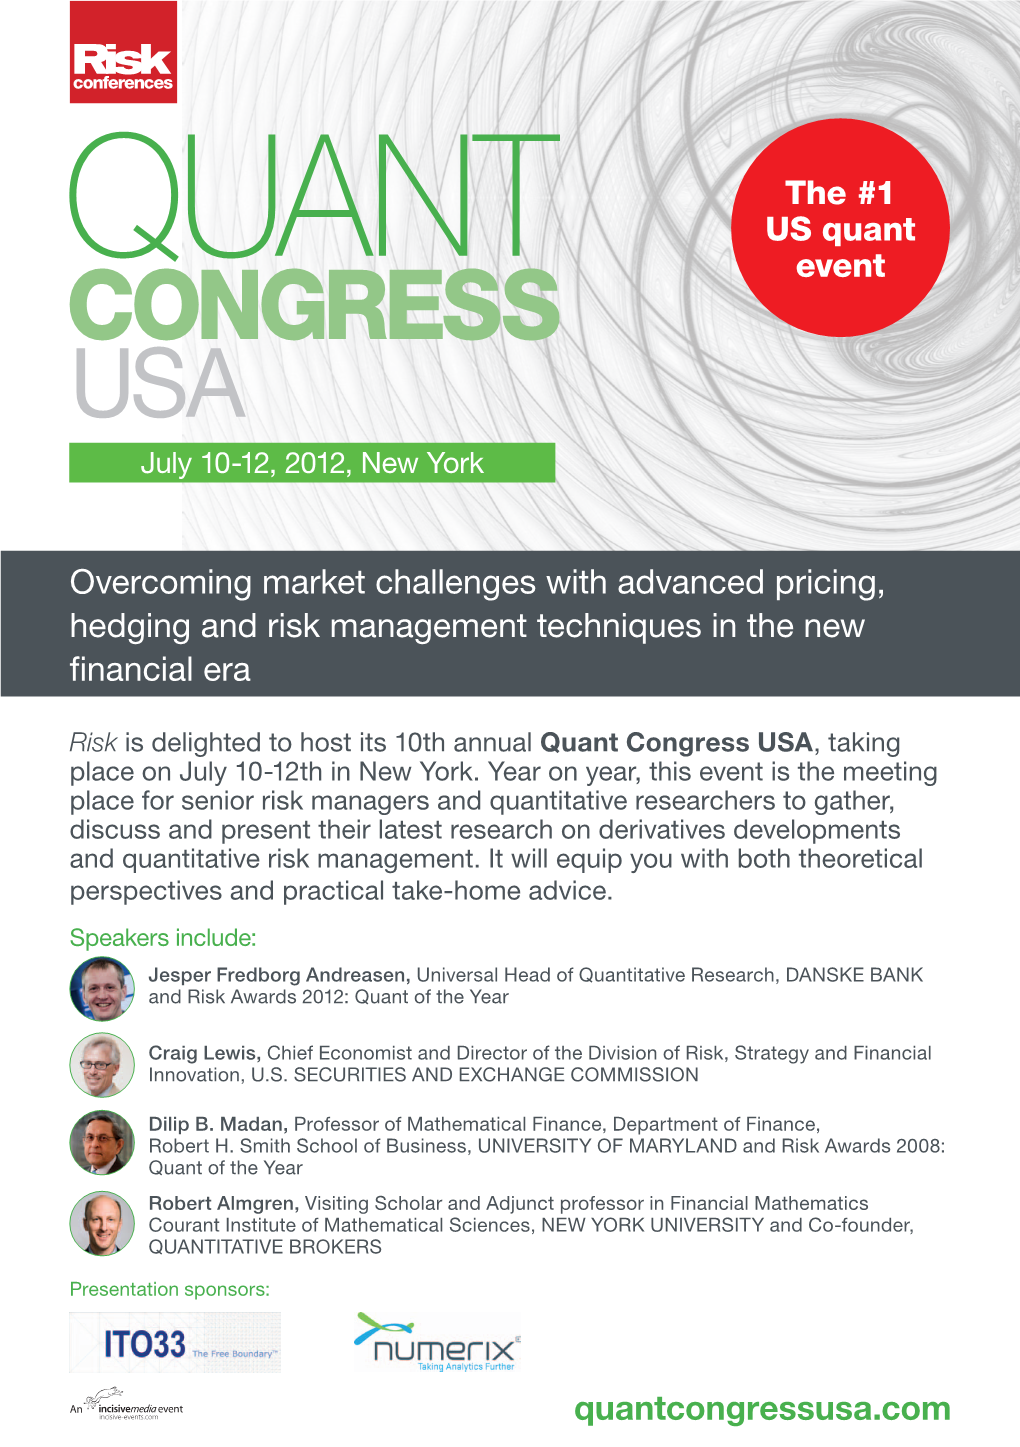 Quant Congress USA 2012 Acceptance Criteria: Originality and Relevance in Quantitative Industry